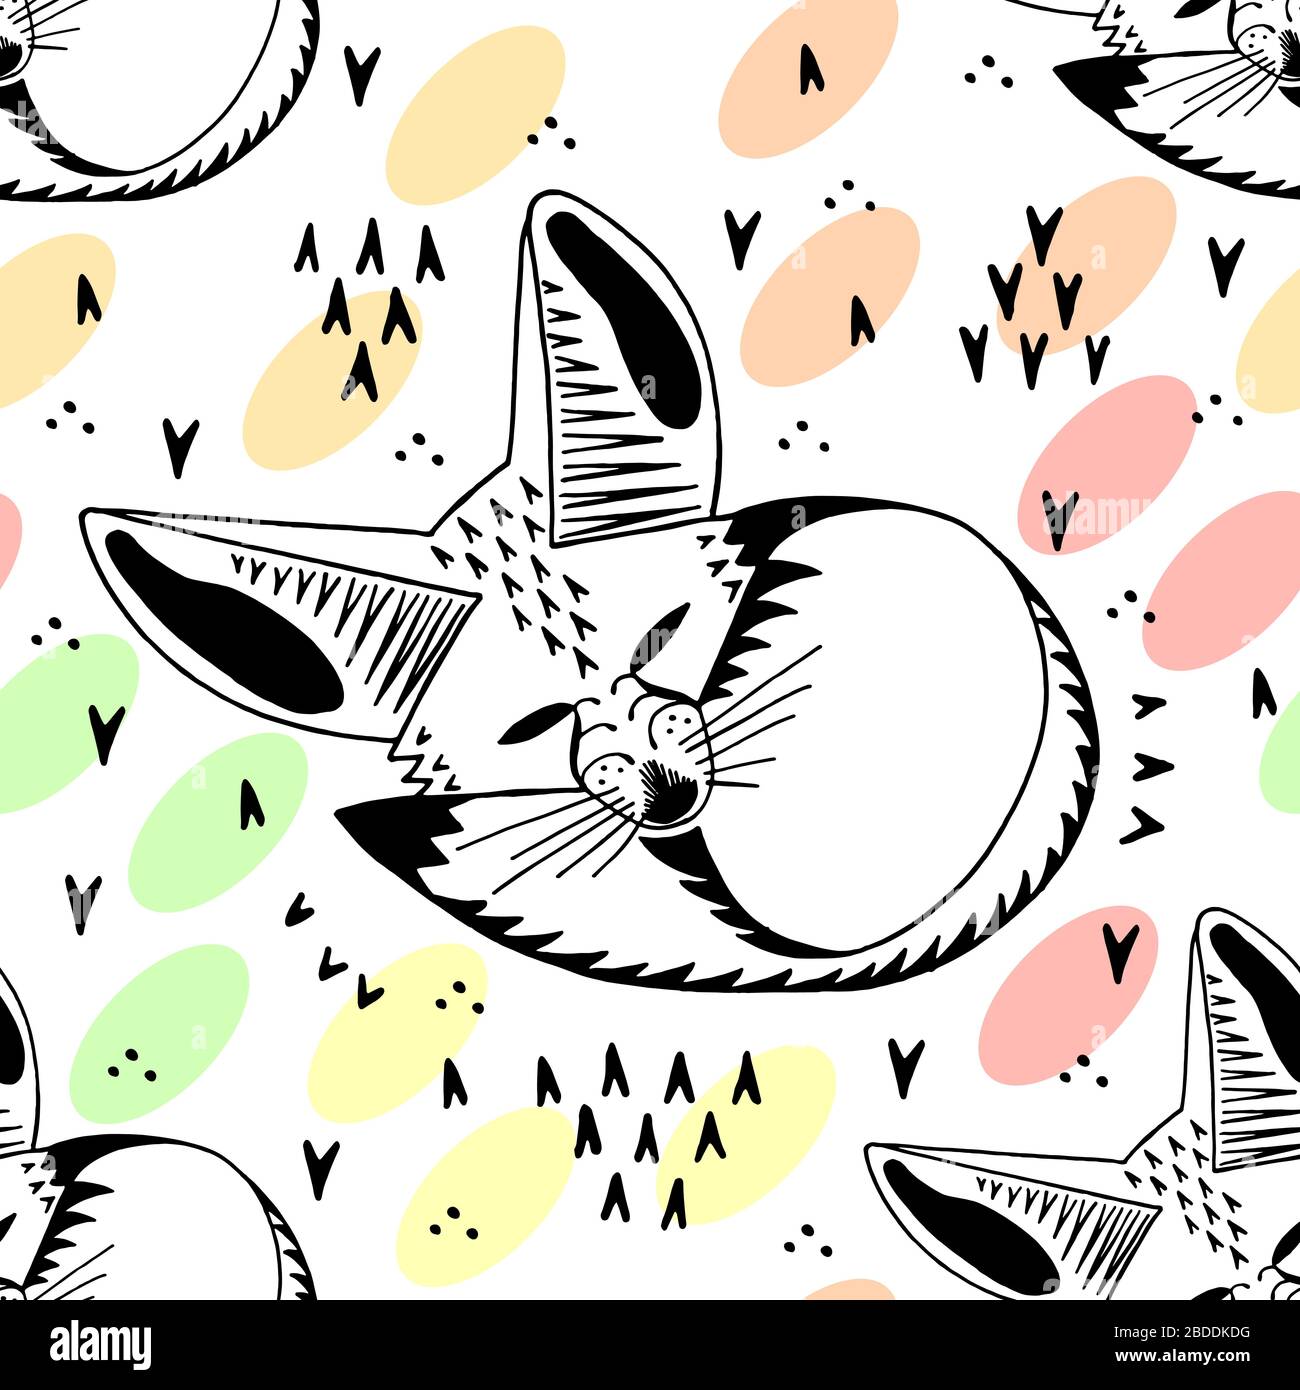 Fennec fox. Linear illustration. Cute kids cartoon style. Seamless pattern. Stock Vector